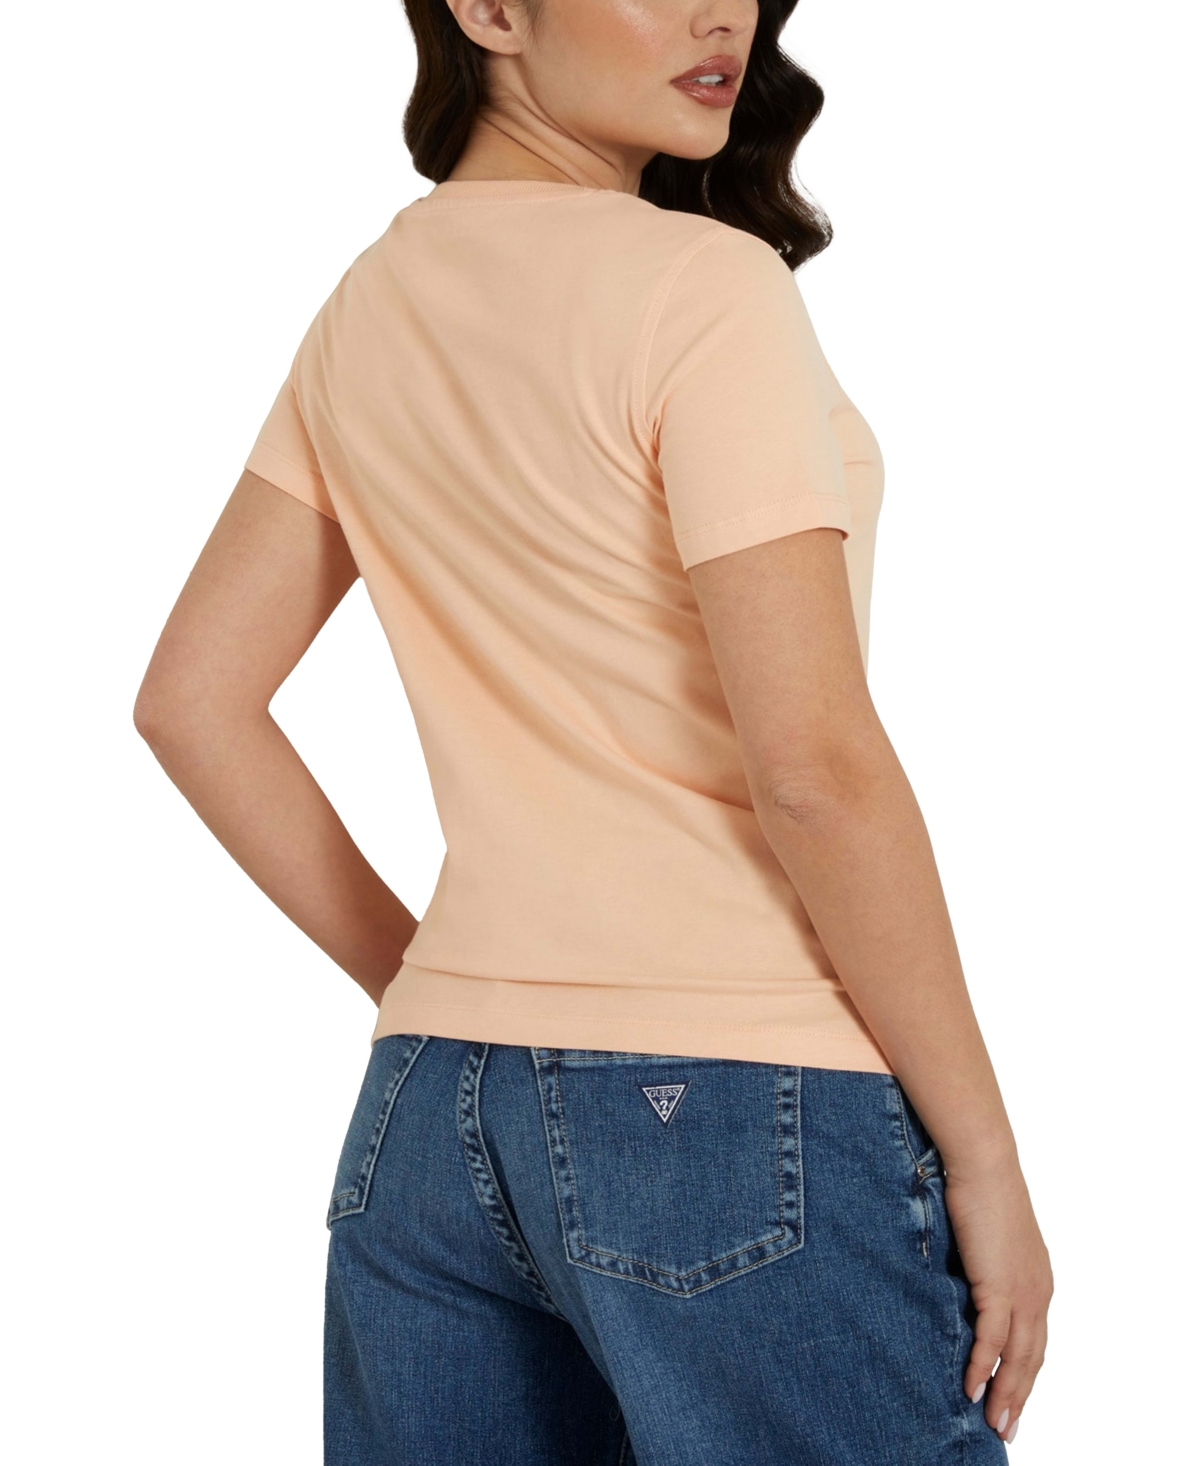 Shop Guess Women's Sequin Logo T-shirt In Peach Sky